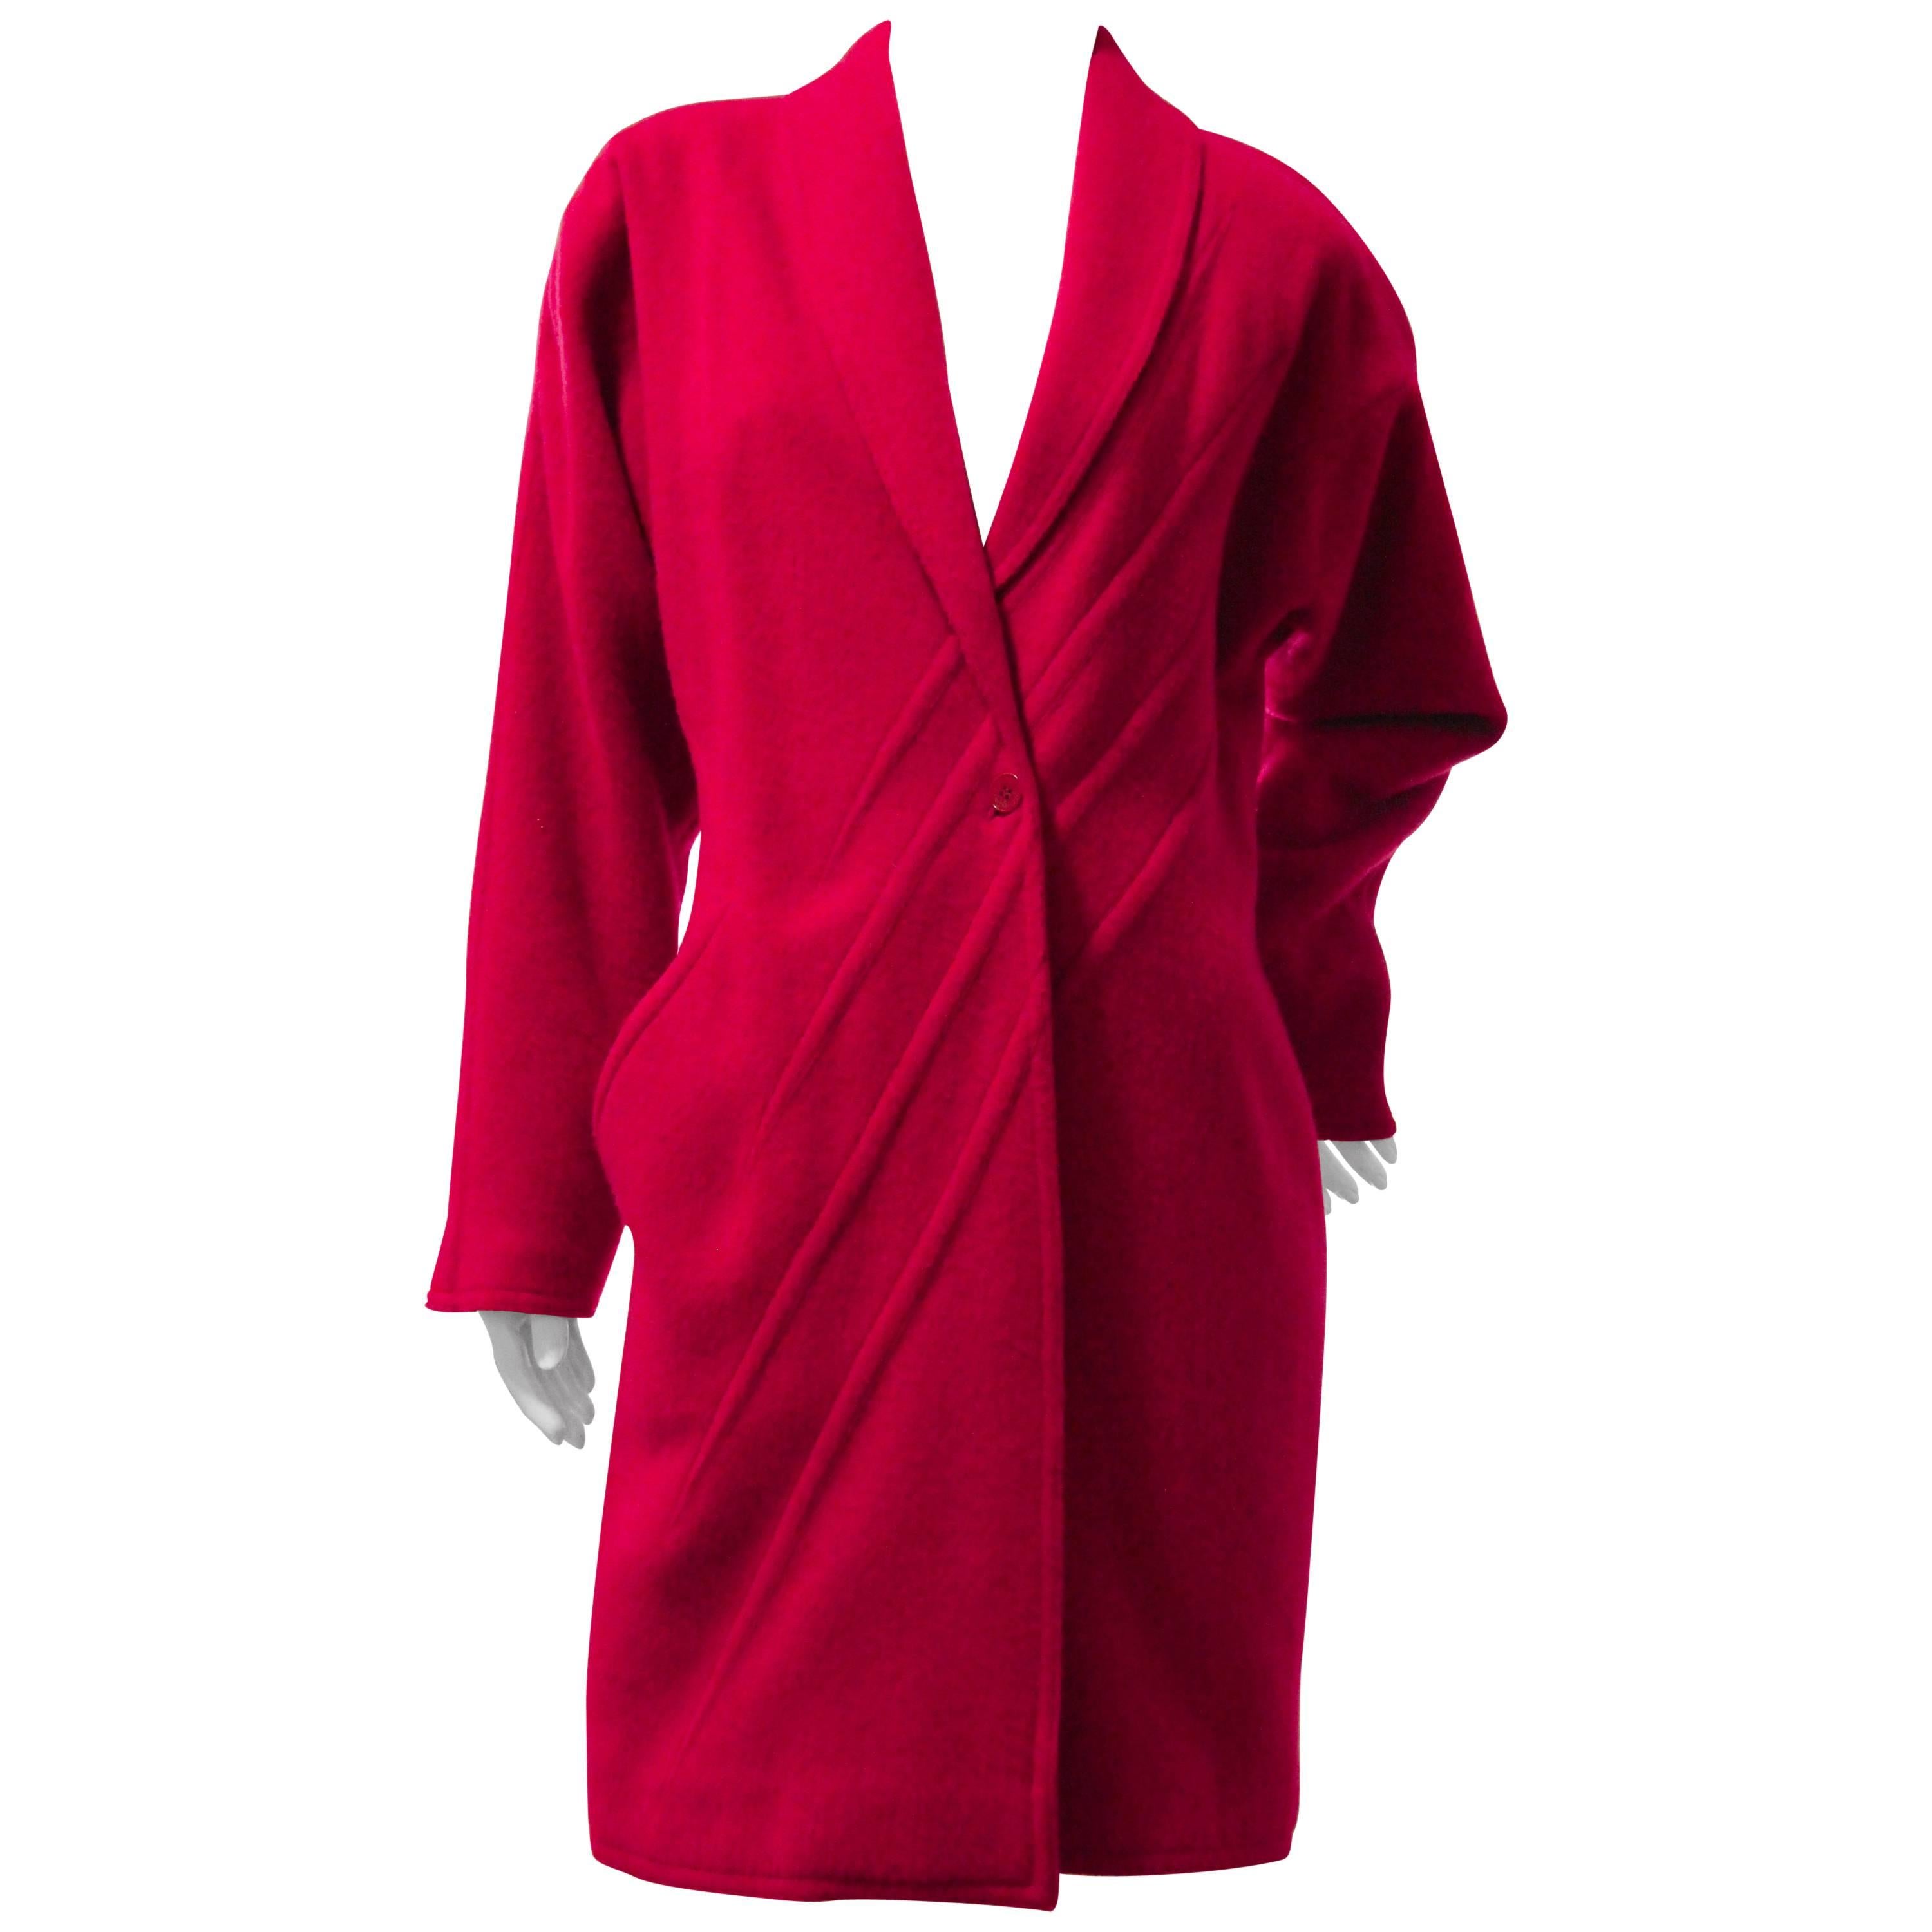 1980s Gianni Versace Primary Red Wool Coat w Angular Trapunto Stitching Details